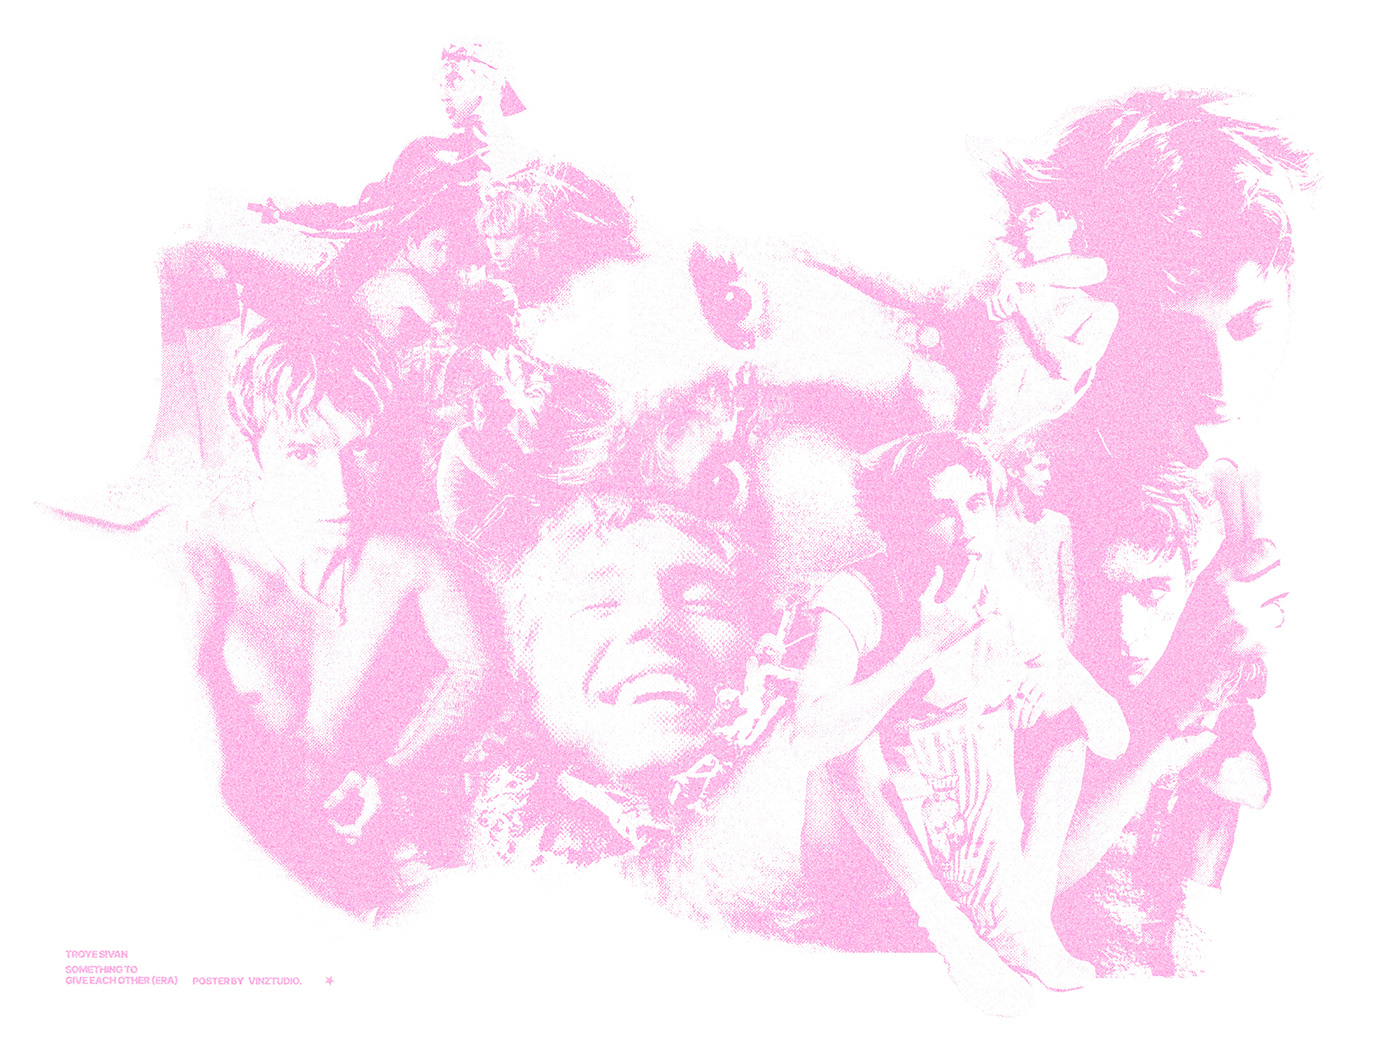 Troye Sivan music musica poster colagem collage design gráfico graphic design  edit Digital Art  artwork